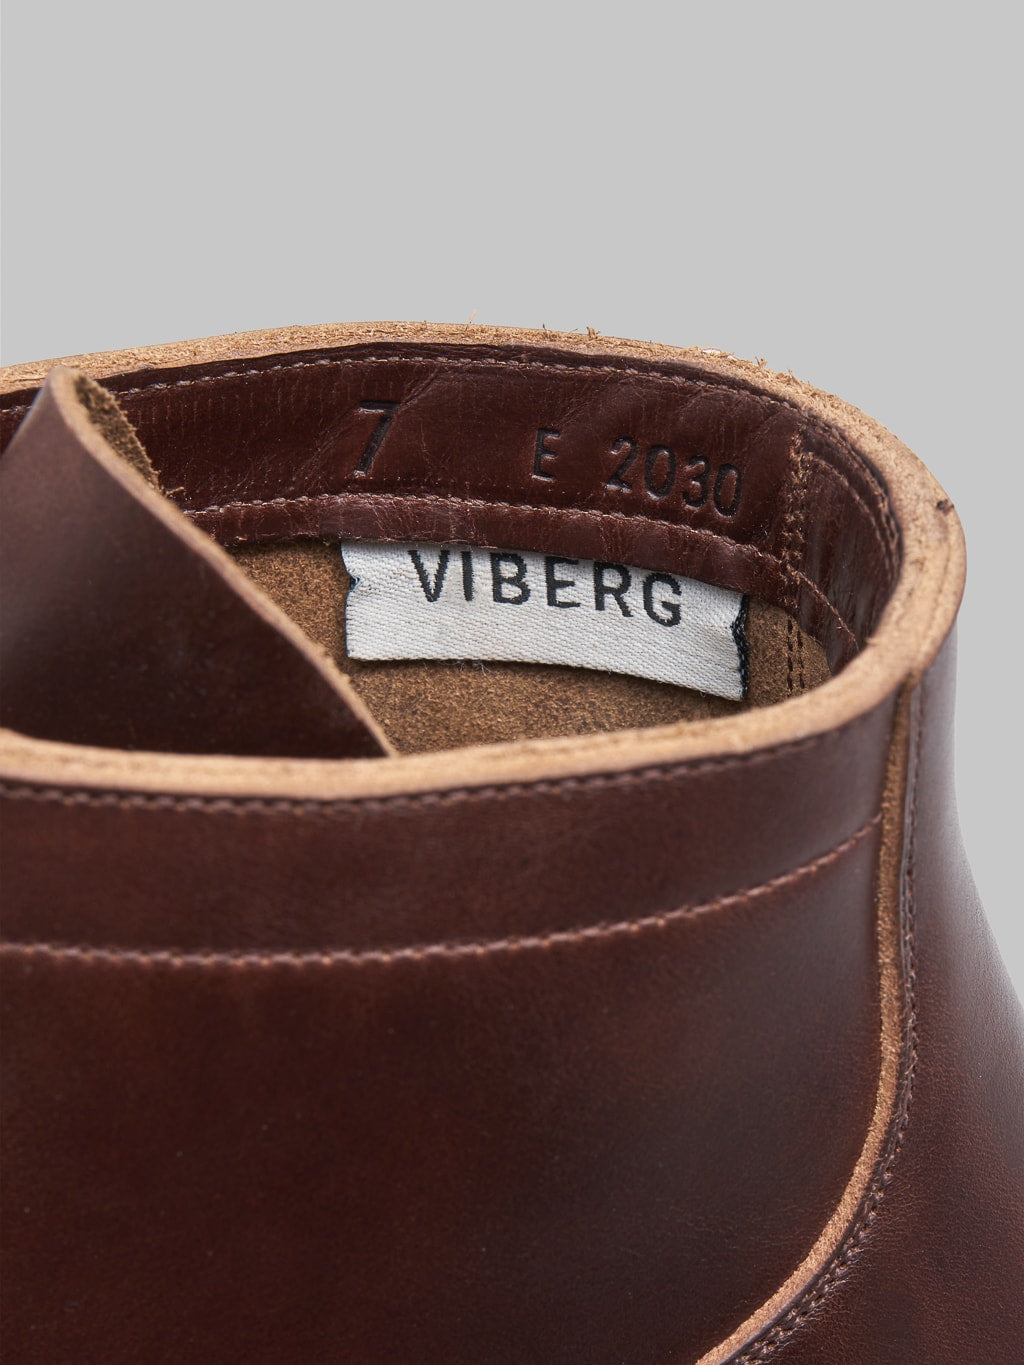 Viberg Service Boot 2030 Brown Chromexcel